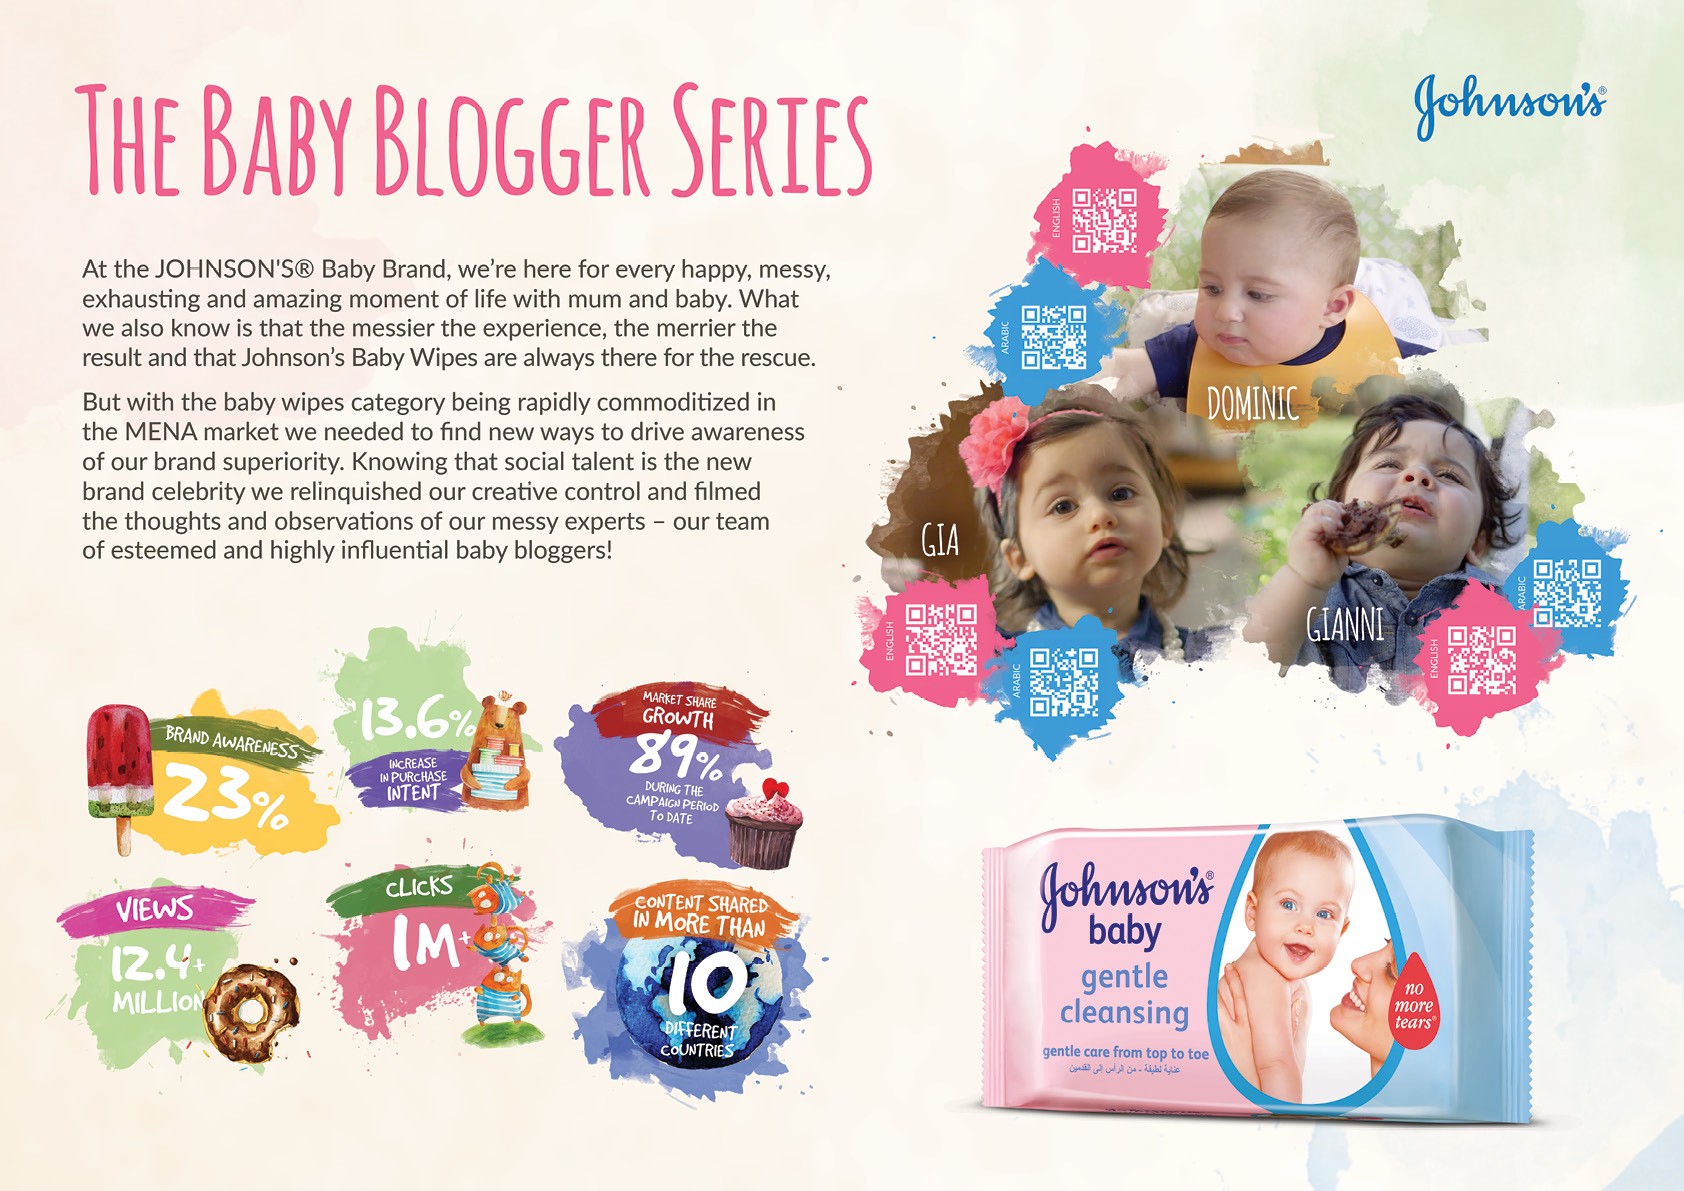 JOHNSON’S® Baby Blogger Series